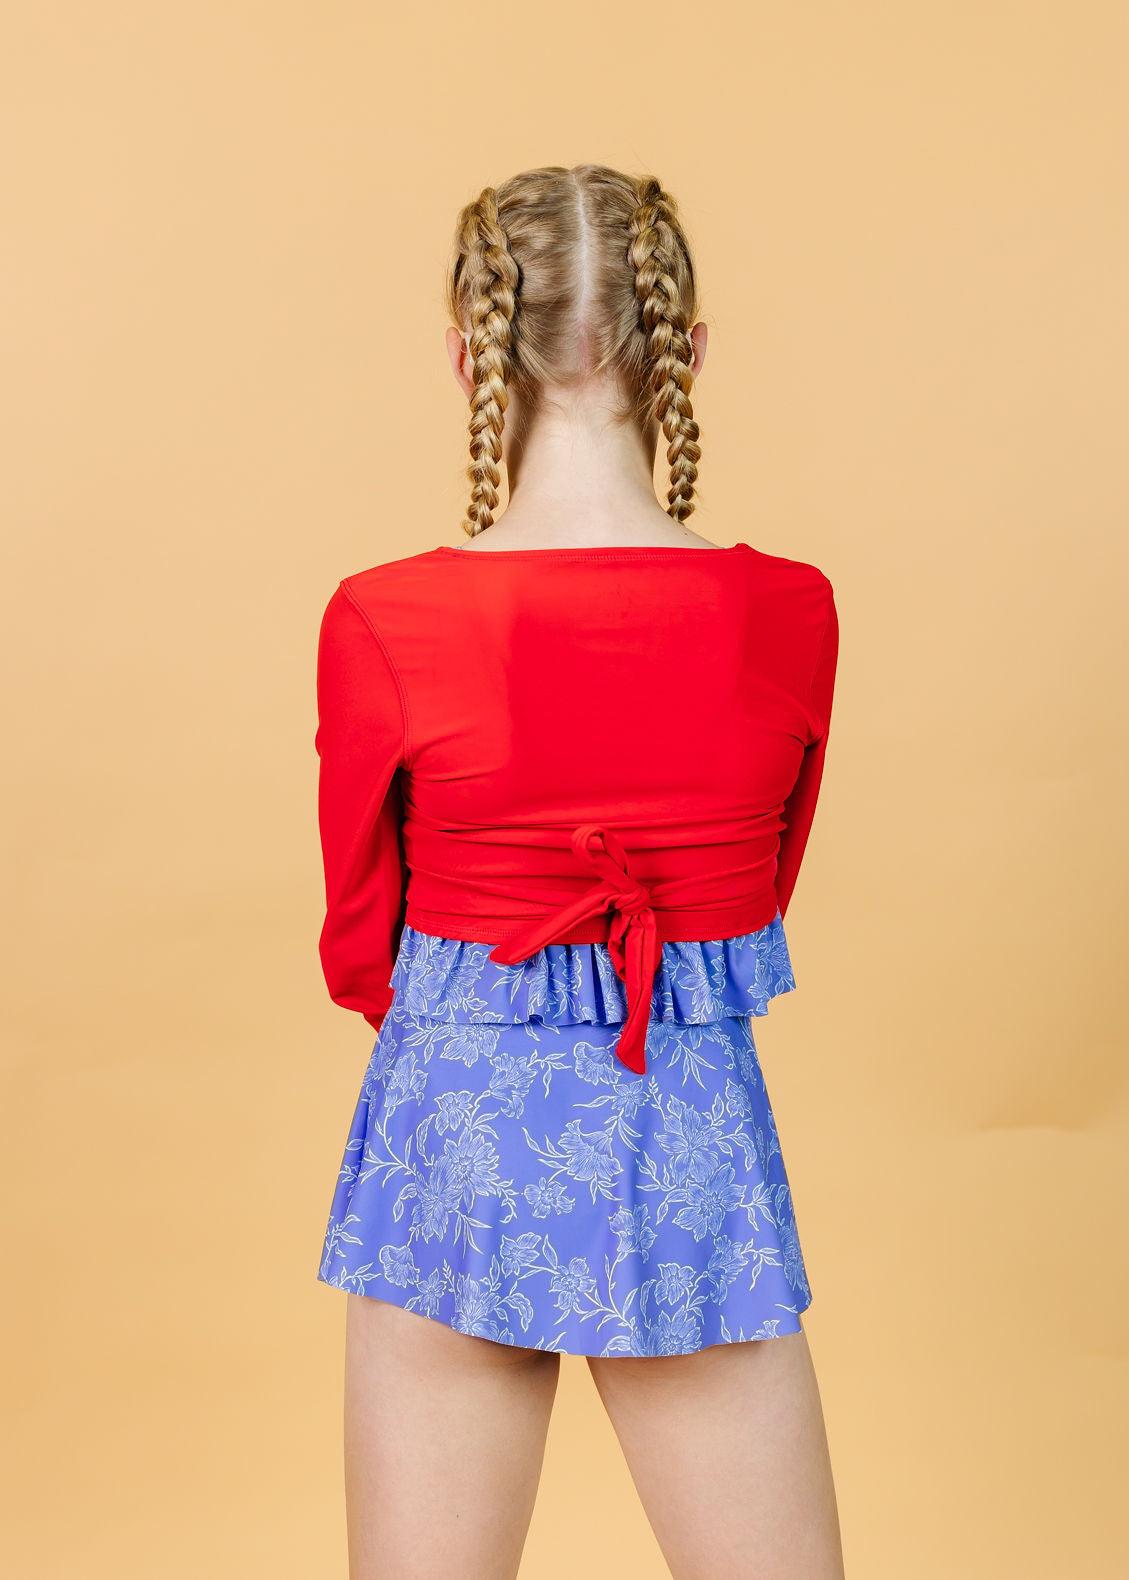 Youth Who Wears Short Skirts - Kortni Jeane